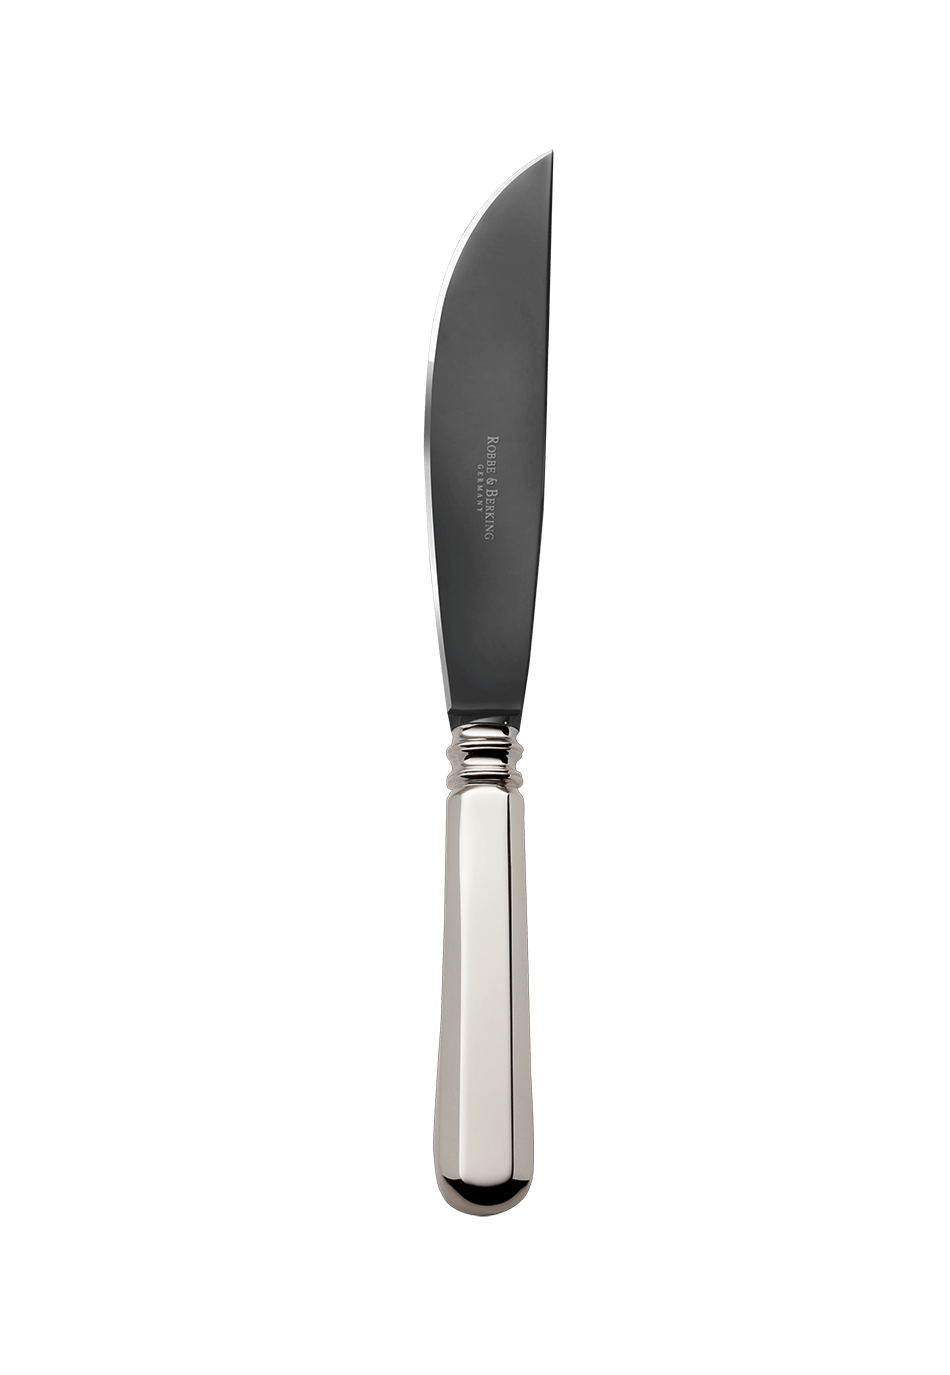 Alt-Spaten Carving Knife Frozen Black (150g massive silverplated)